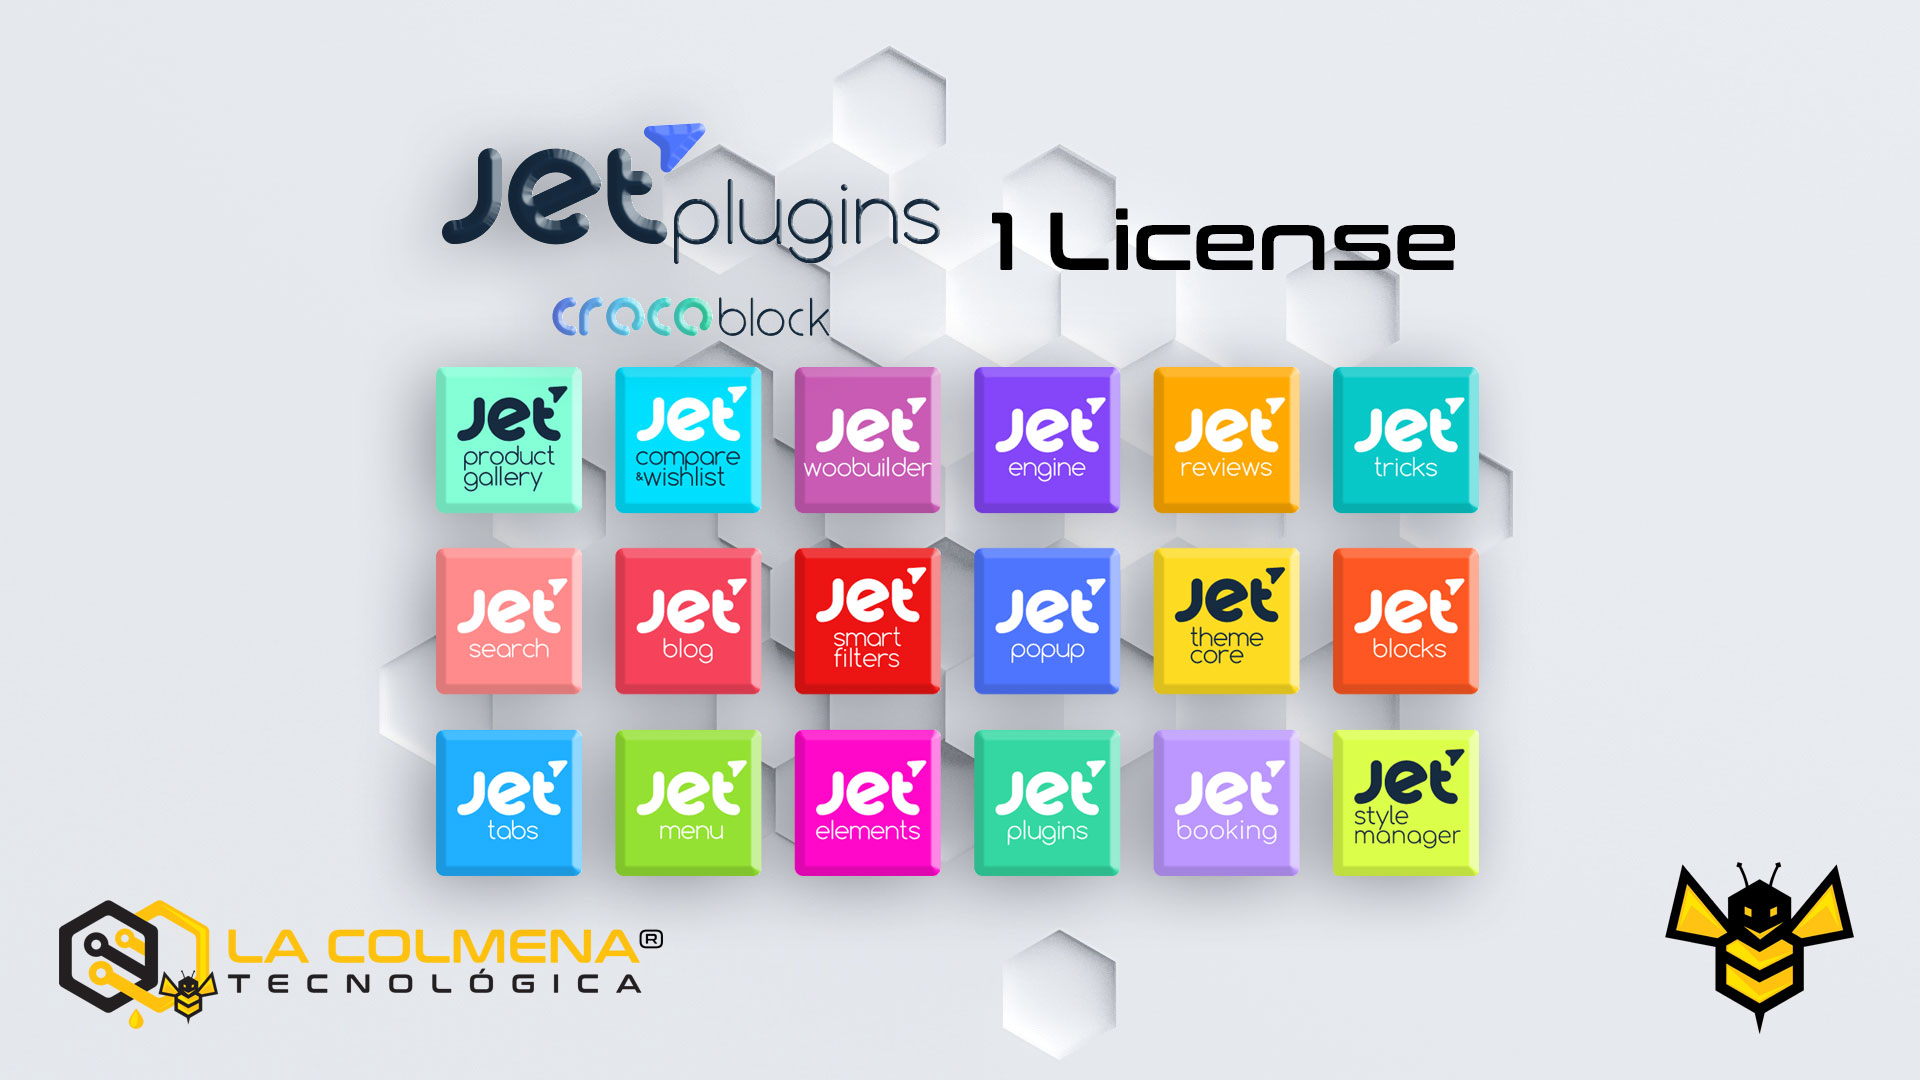 Crocoblock JetPlugins License